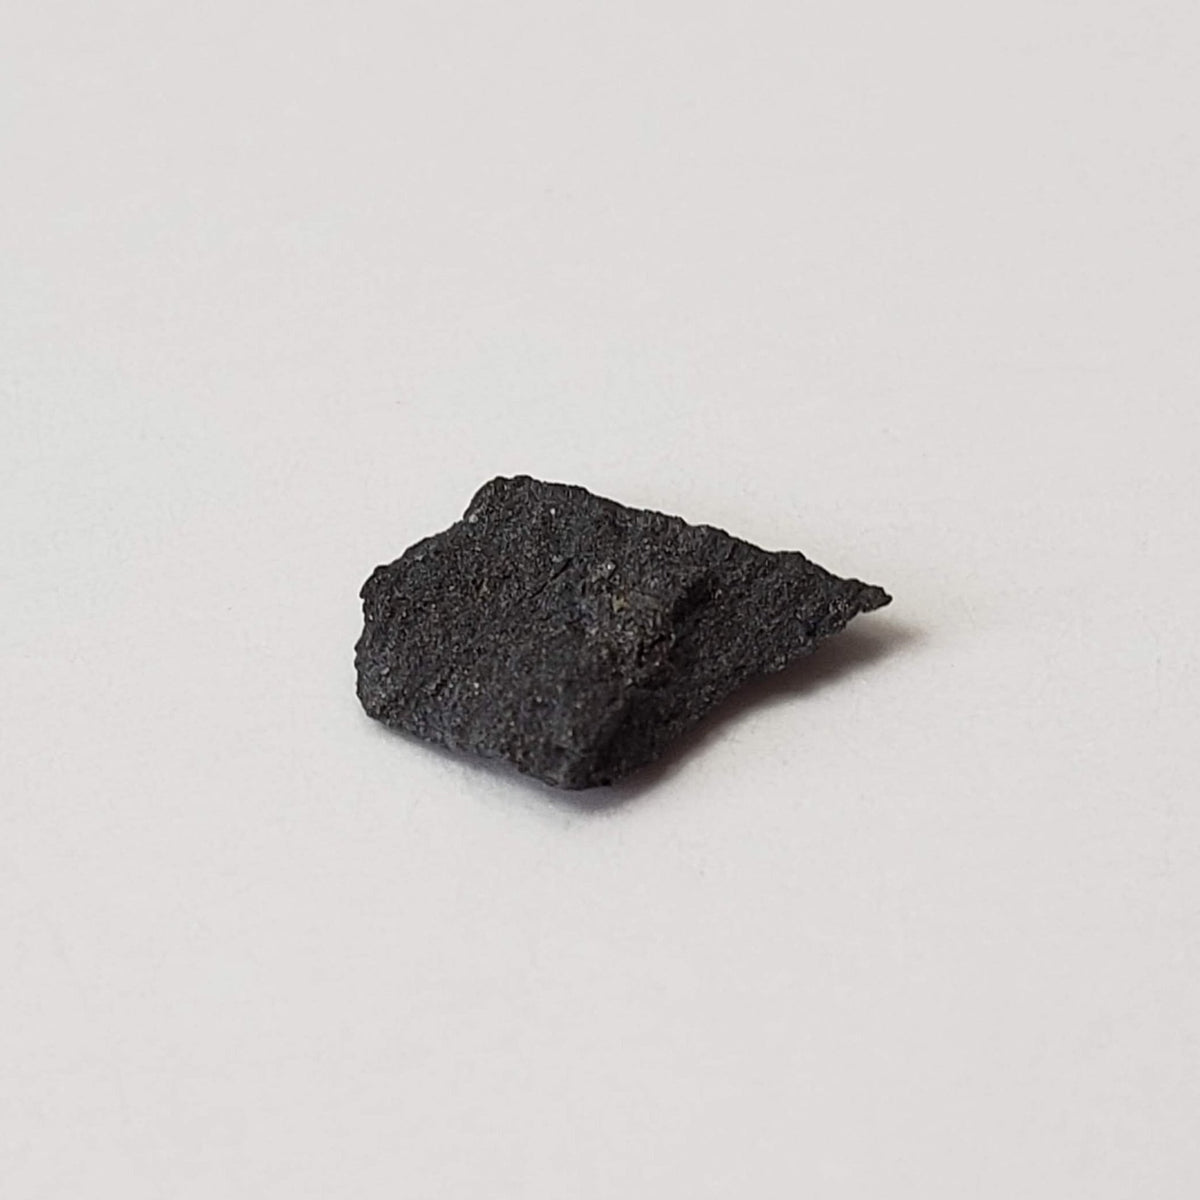 Abee Meteorite | 124 mg | Fragment | Rare Enstatite | EH4 Class | Observed Fall 1952 Canada | Canagem.com